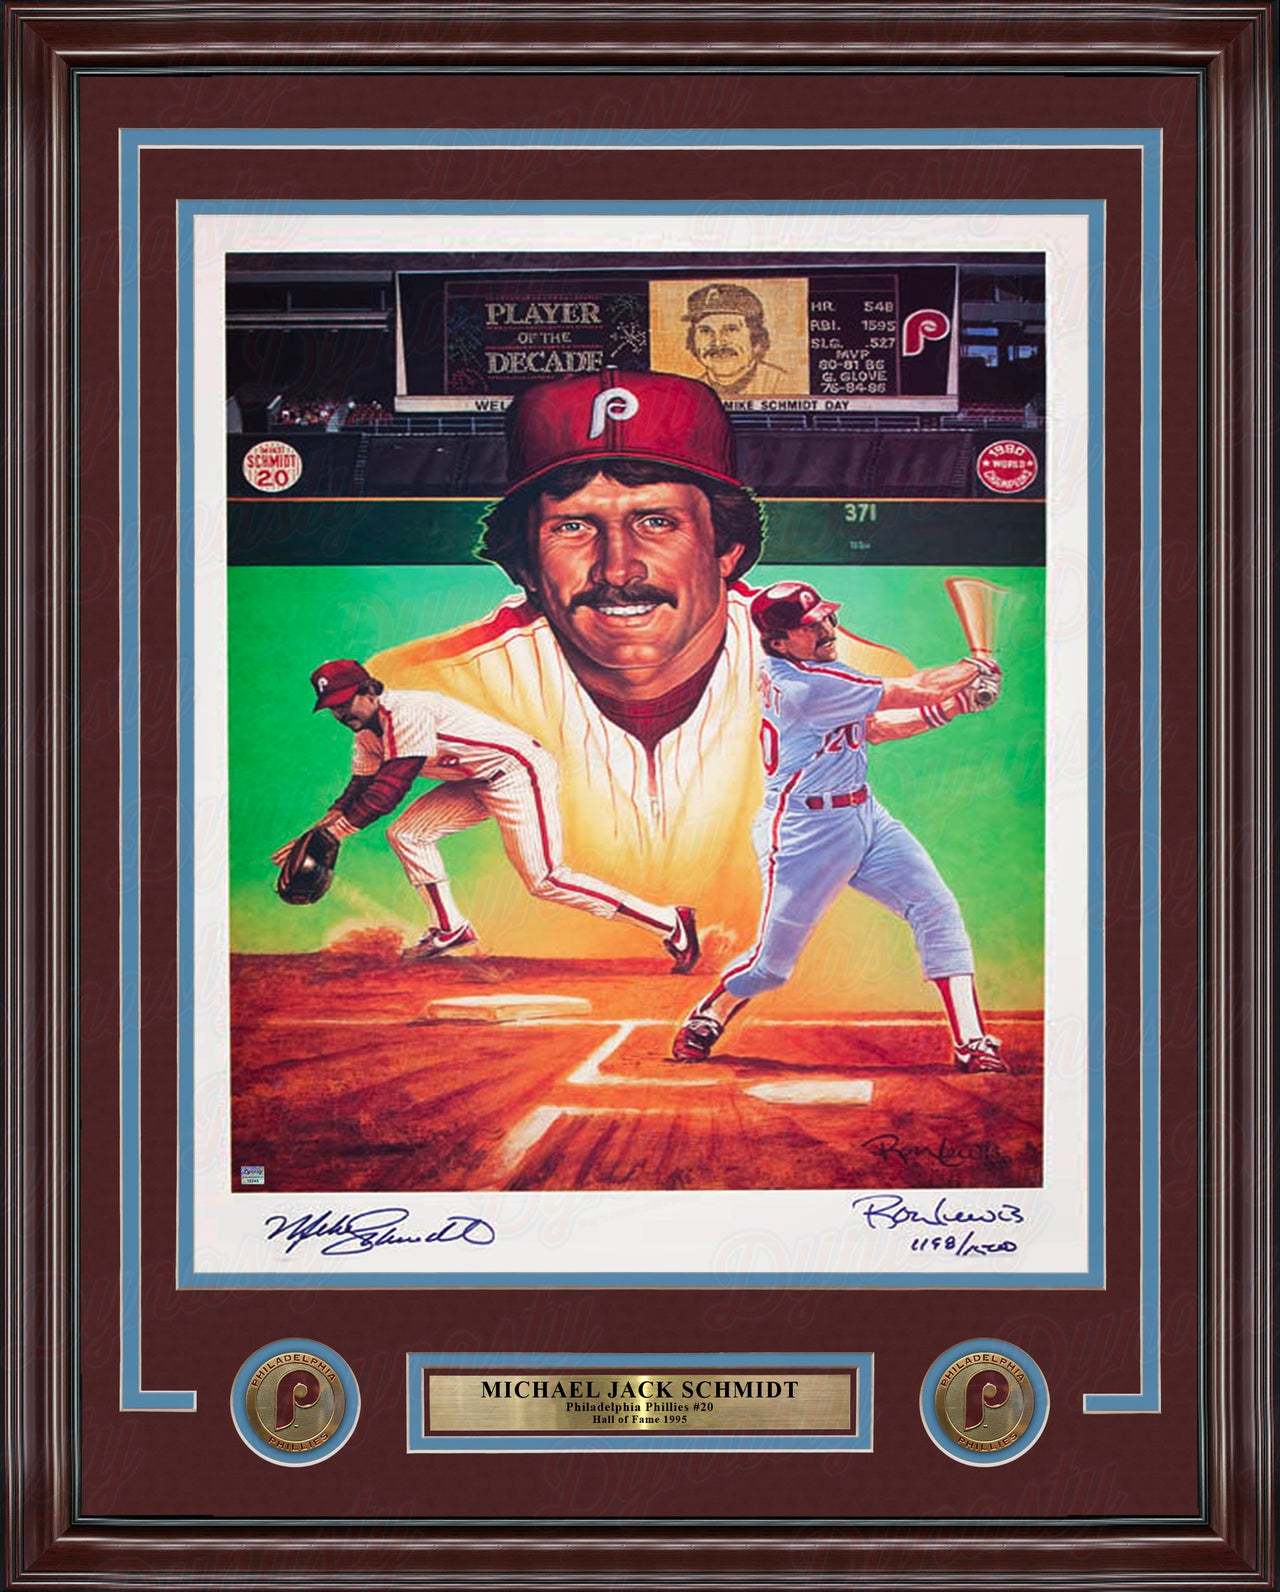 Framed Autographed/Signed Mike Schmidt 33x42 Philadelphia Retro Blue  Baseball Jersey JSA COA